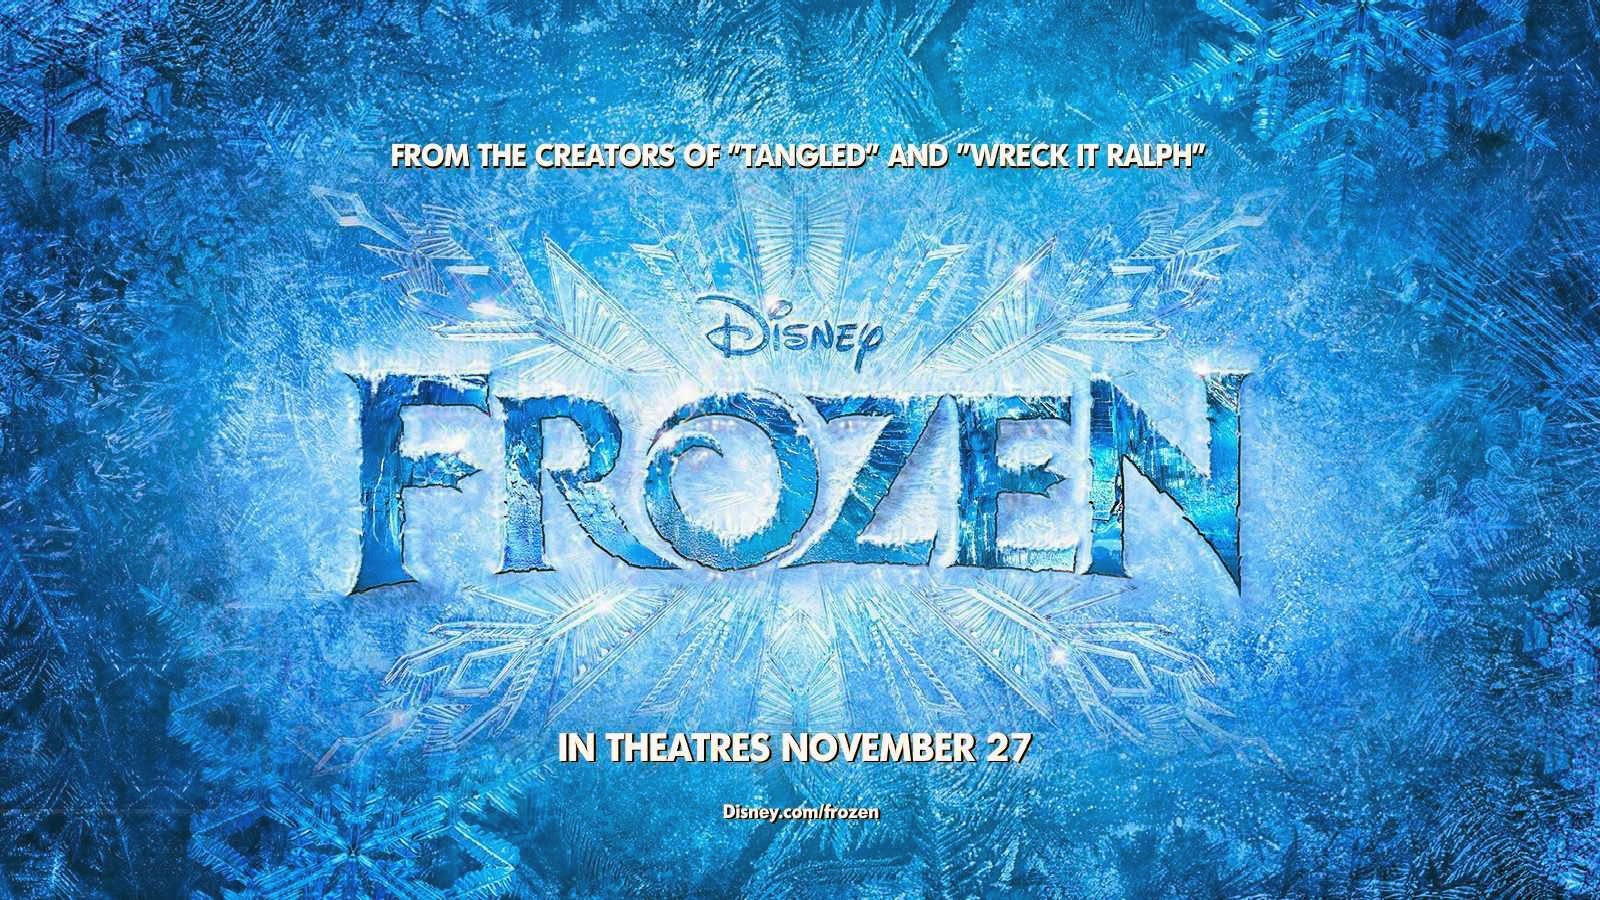 Frozen-disney-frozen-34977338-1600-900.jpg